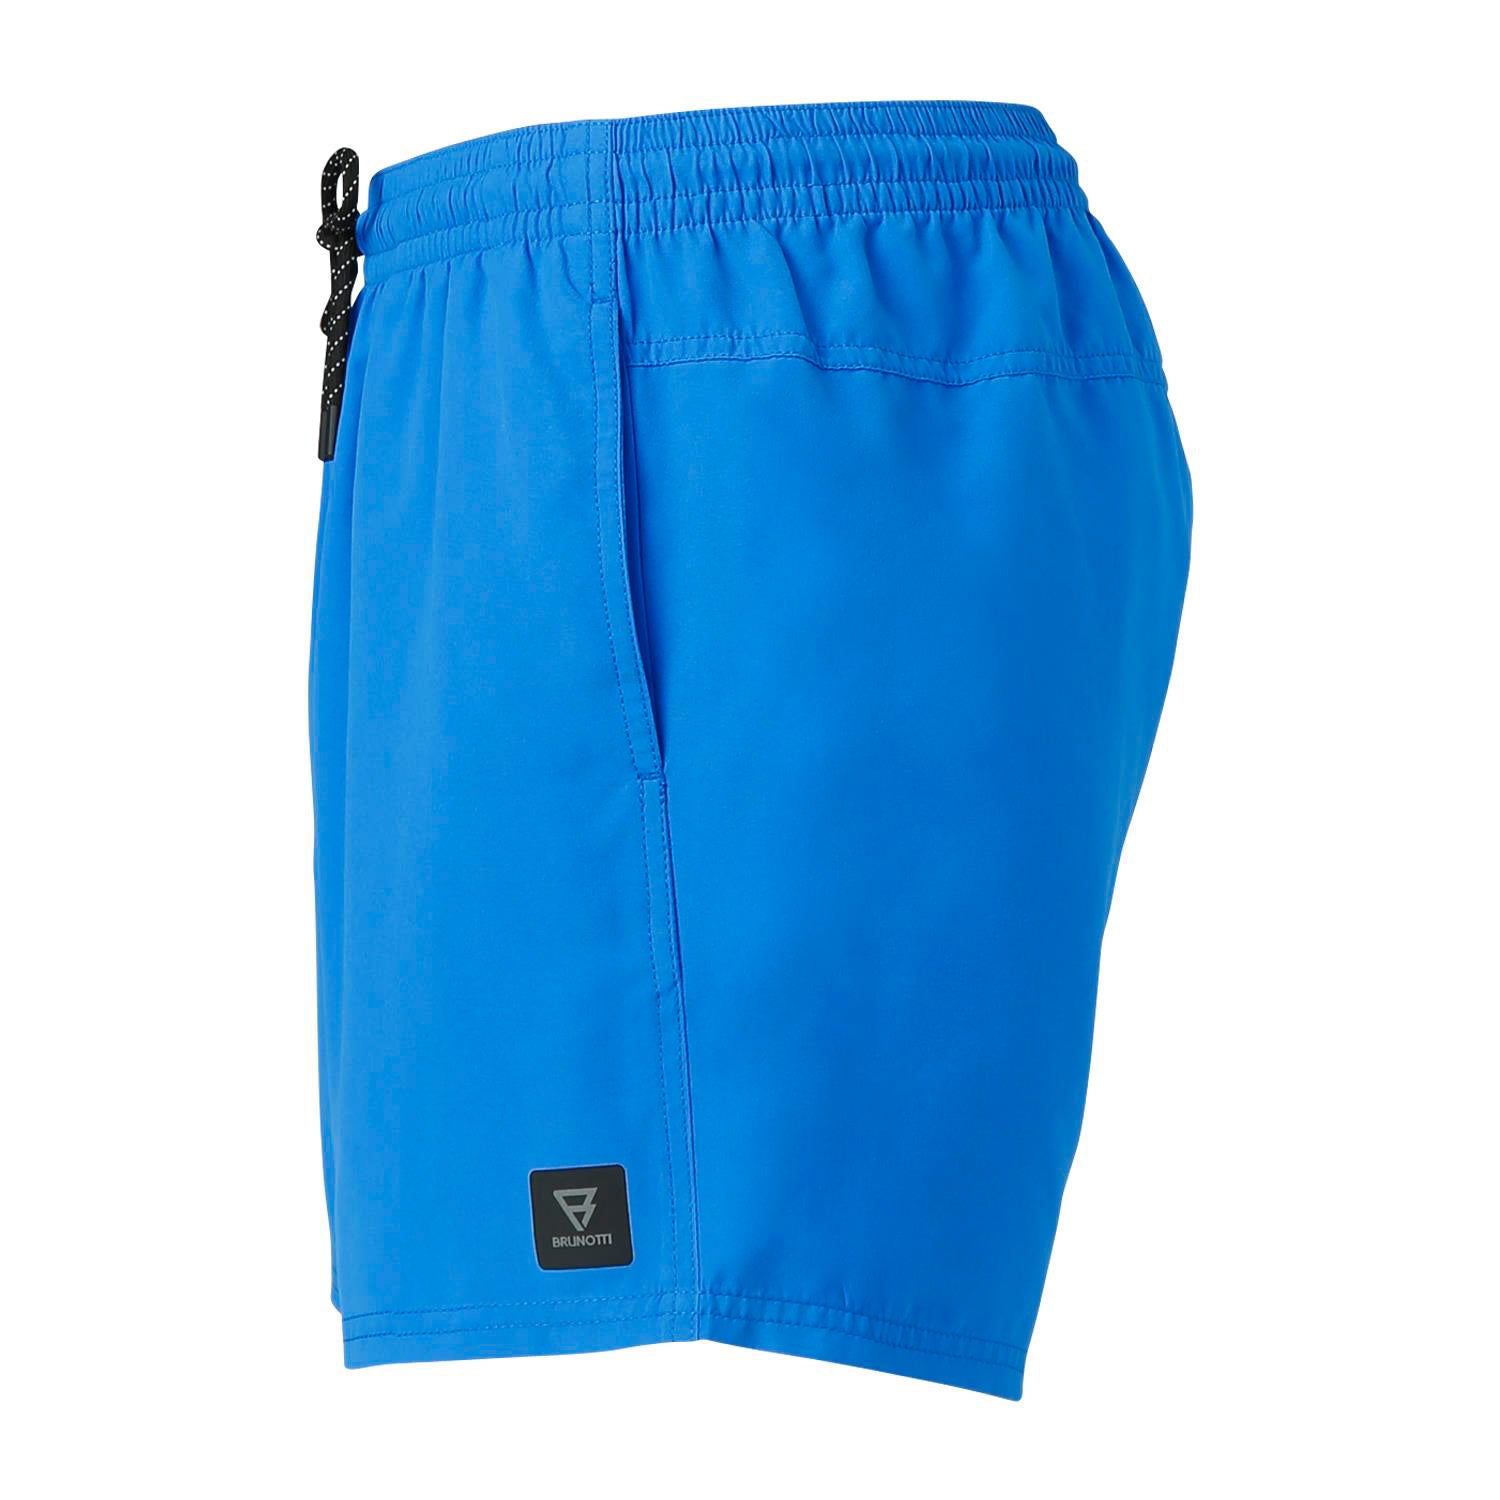 CrunECO-N Men Swim Shorts | Neon Blue